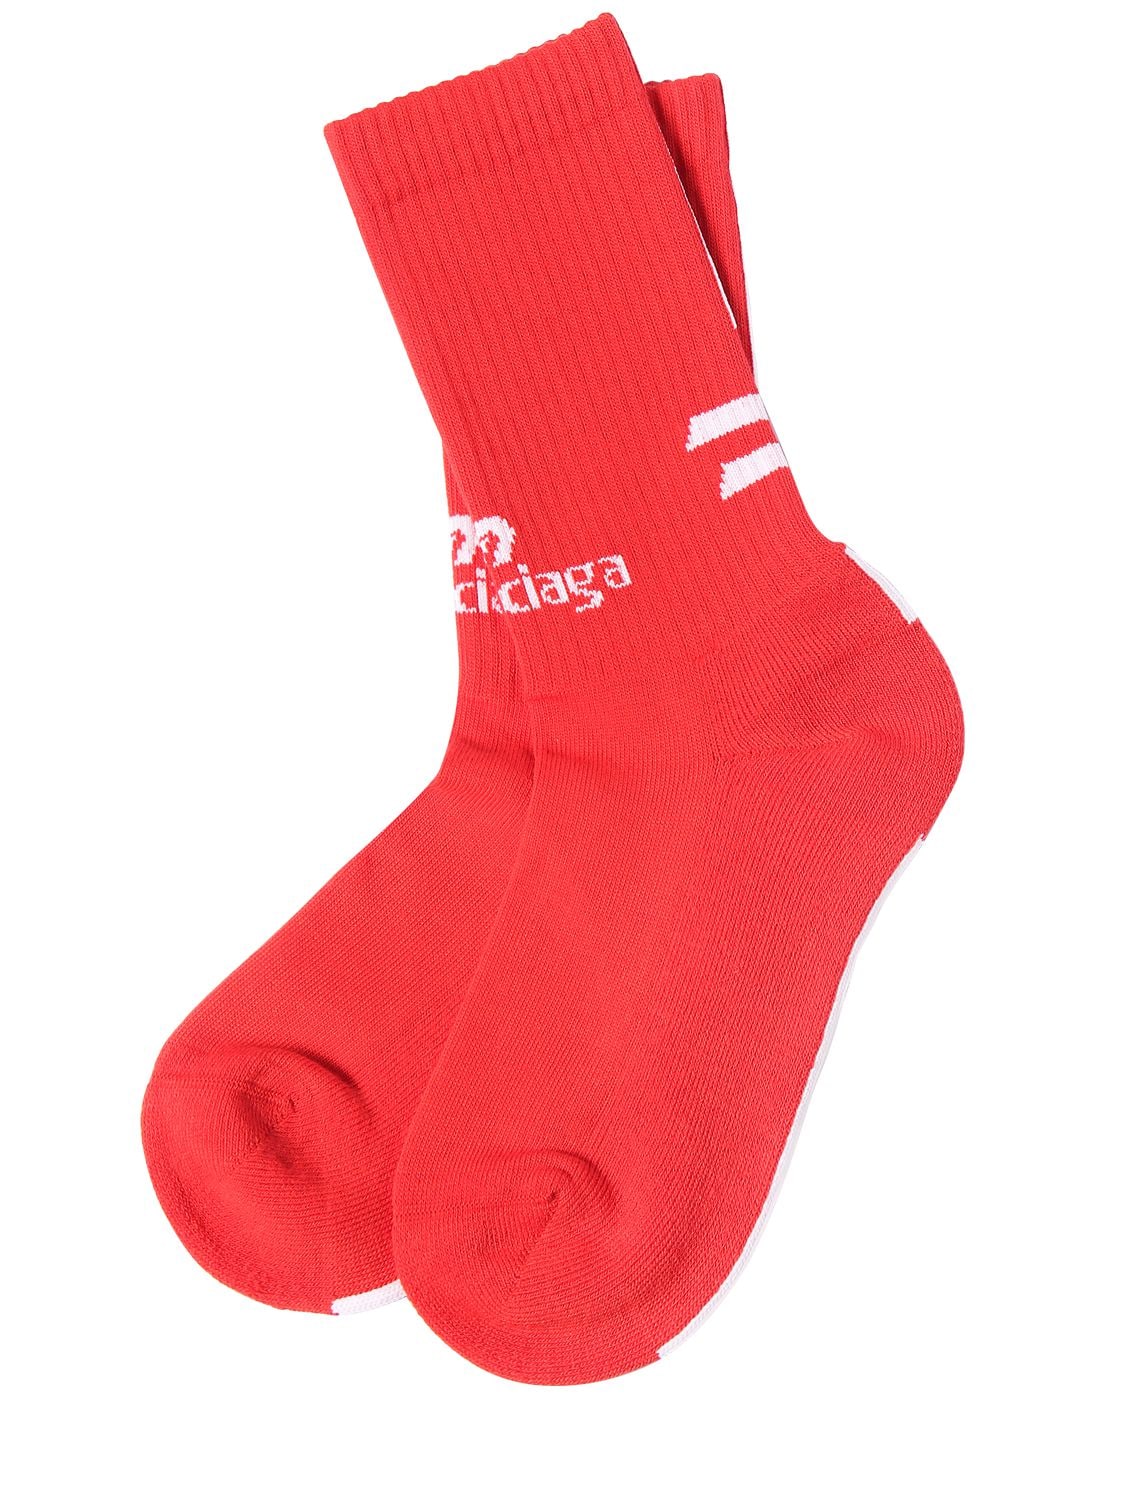 red balenciaga socks